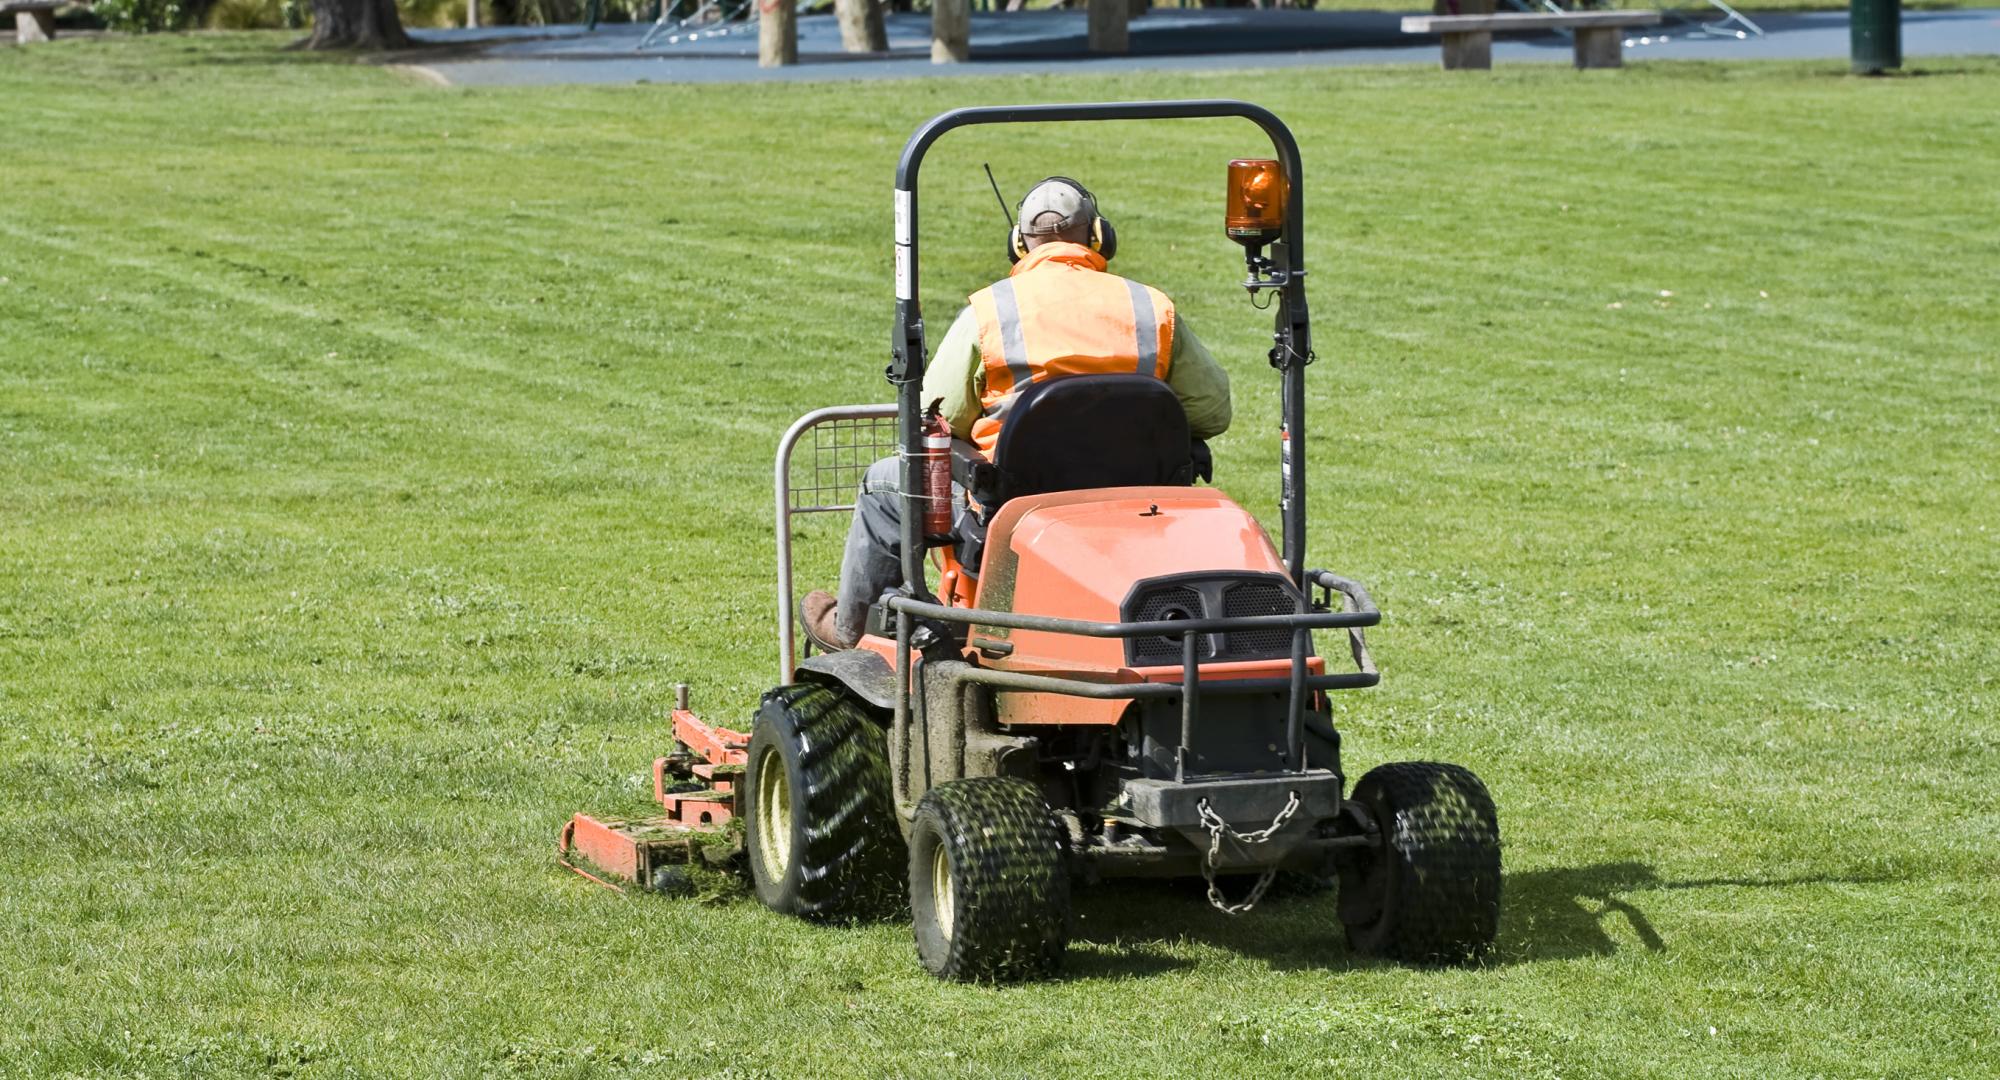 Man cutting grass on lawn moer